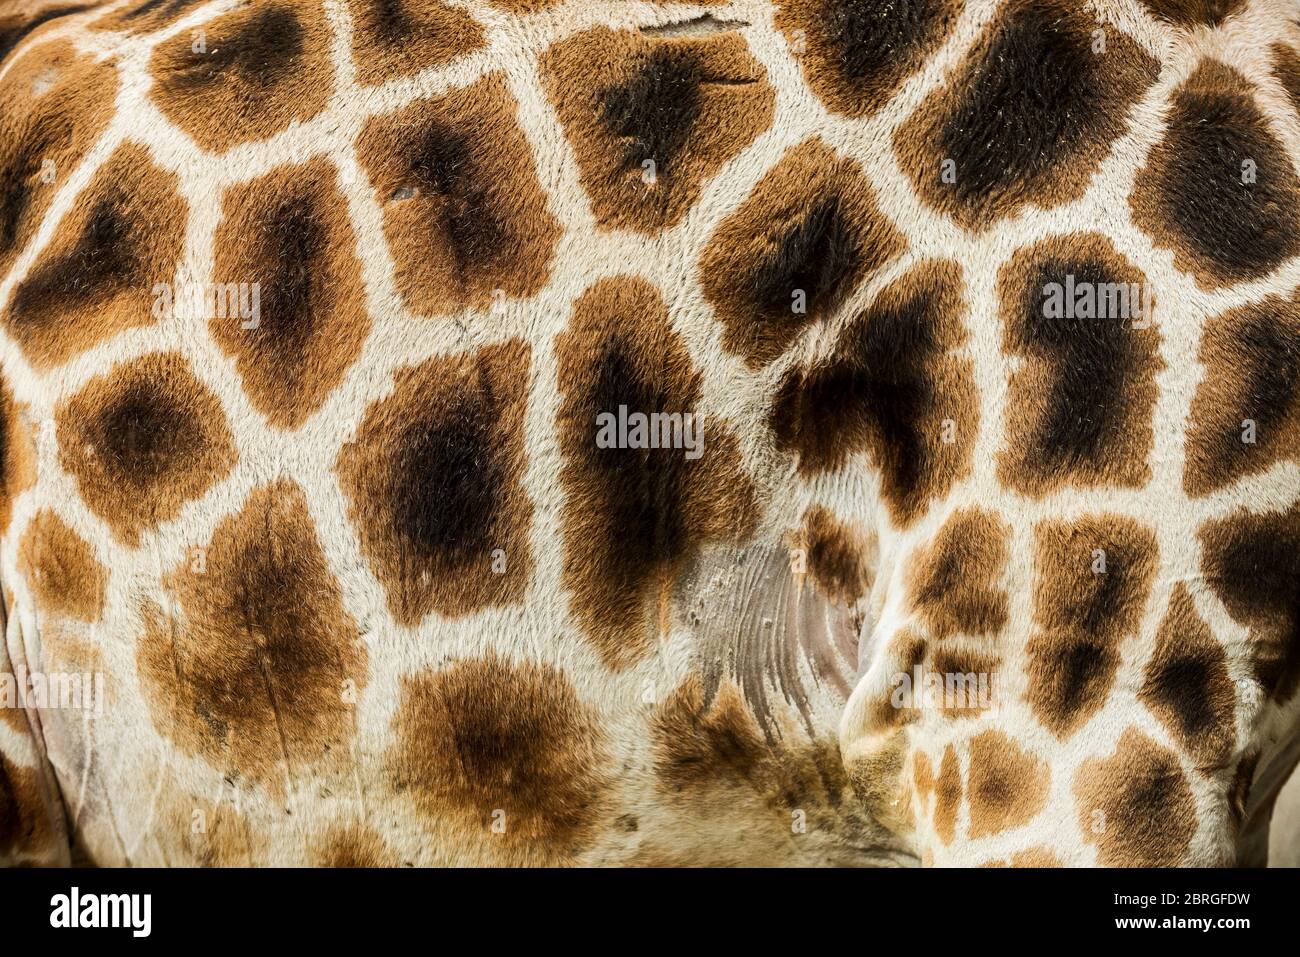 giraffe close-up detail of skin pattern Stock Photo